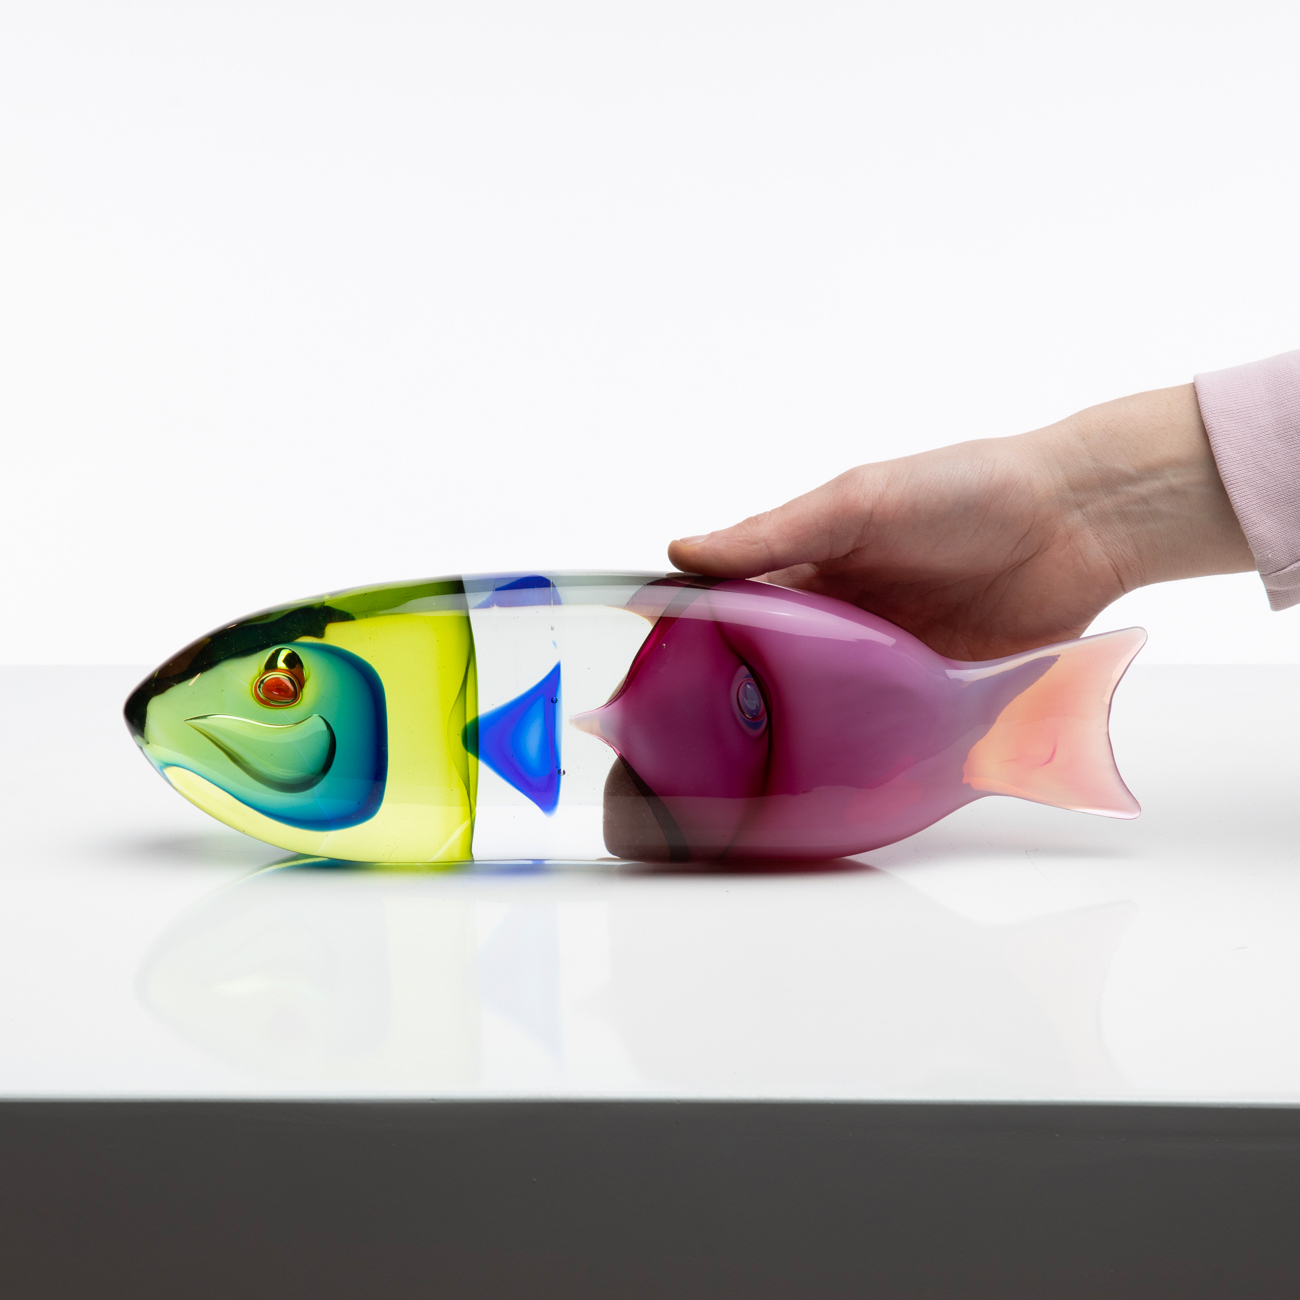 Fish in a fish by Antonio da Ros - img02